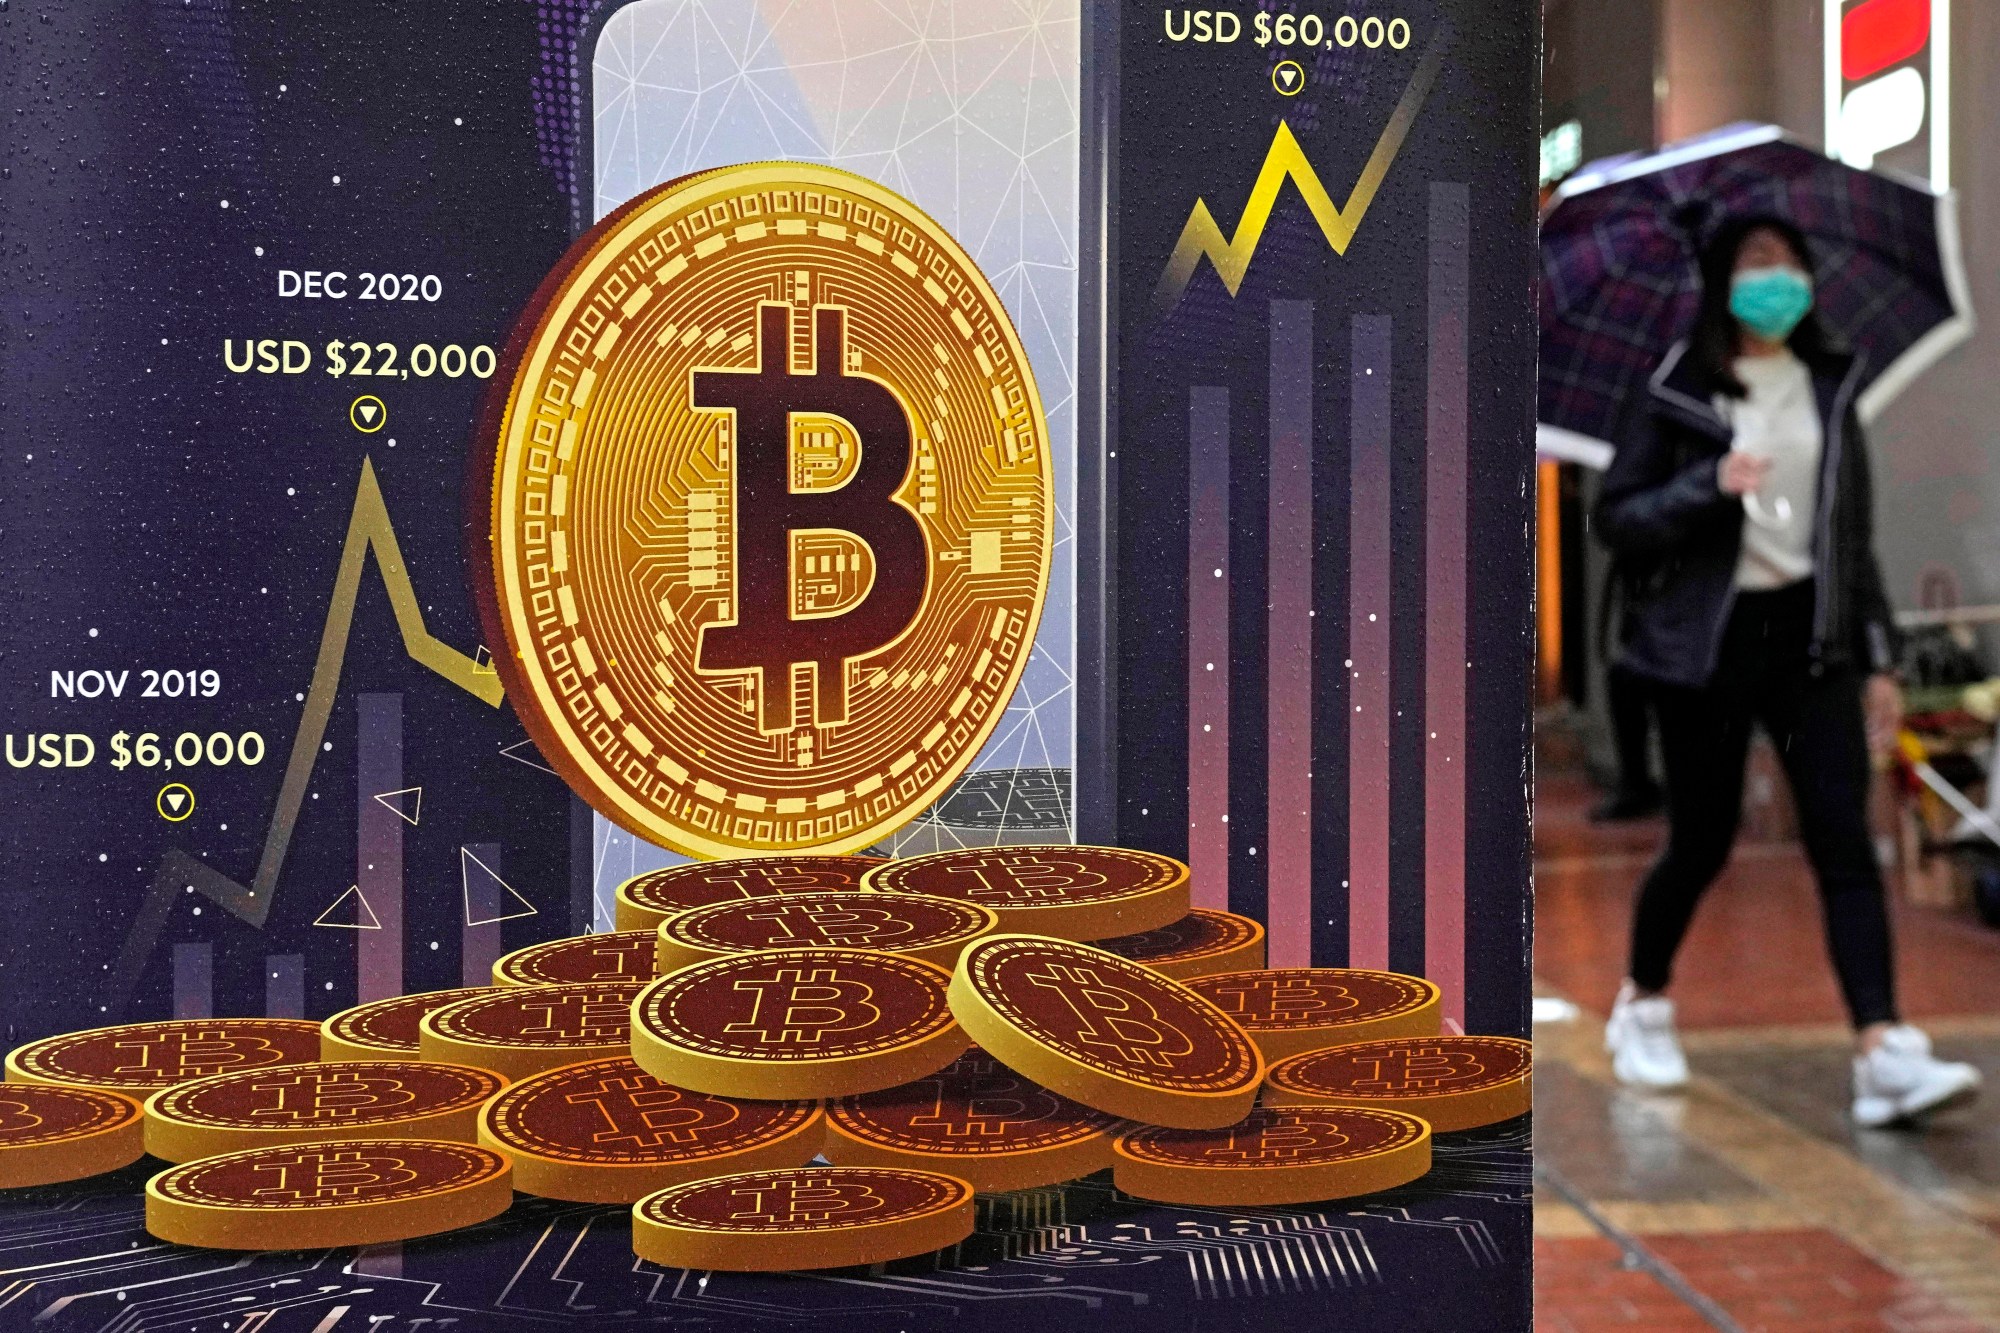 Bitcoin worth $72 million stolen from Bitfinex exchange in Hong Kong | Reuters